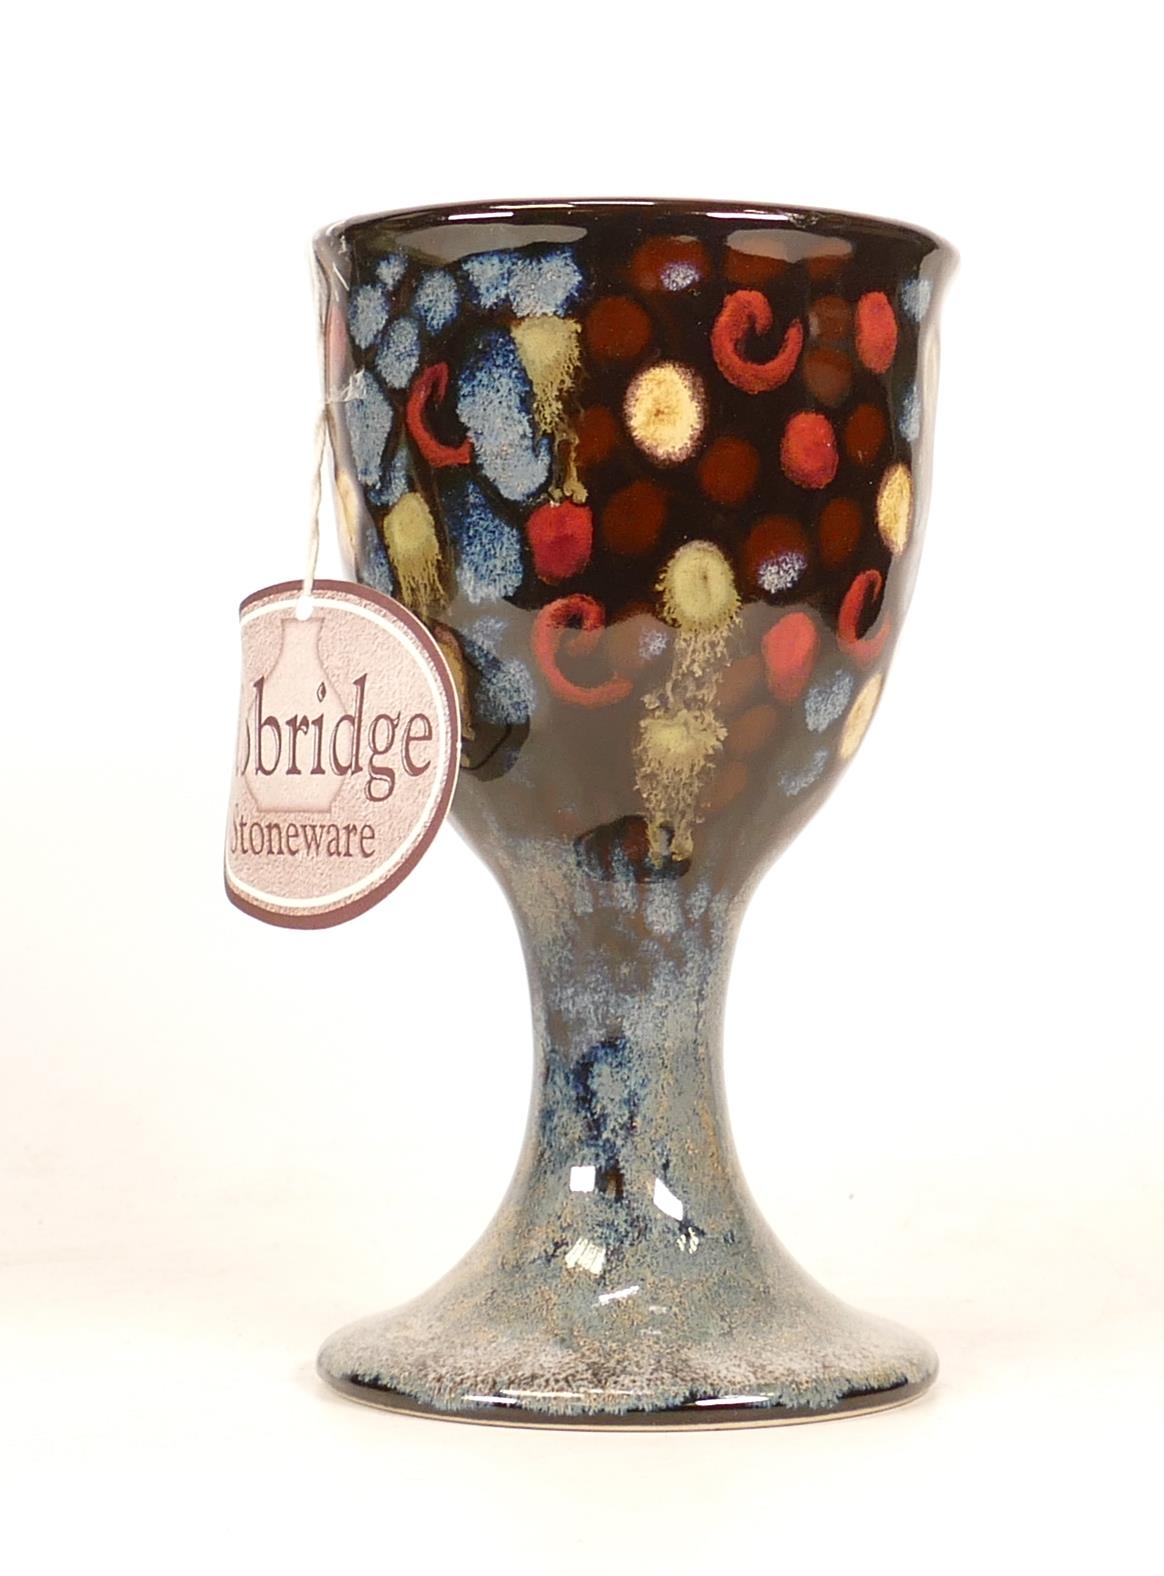 Cobridge Stoneware Goblet designed by Anita Harris